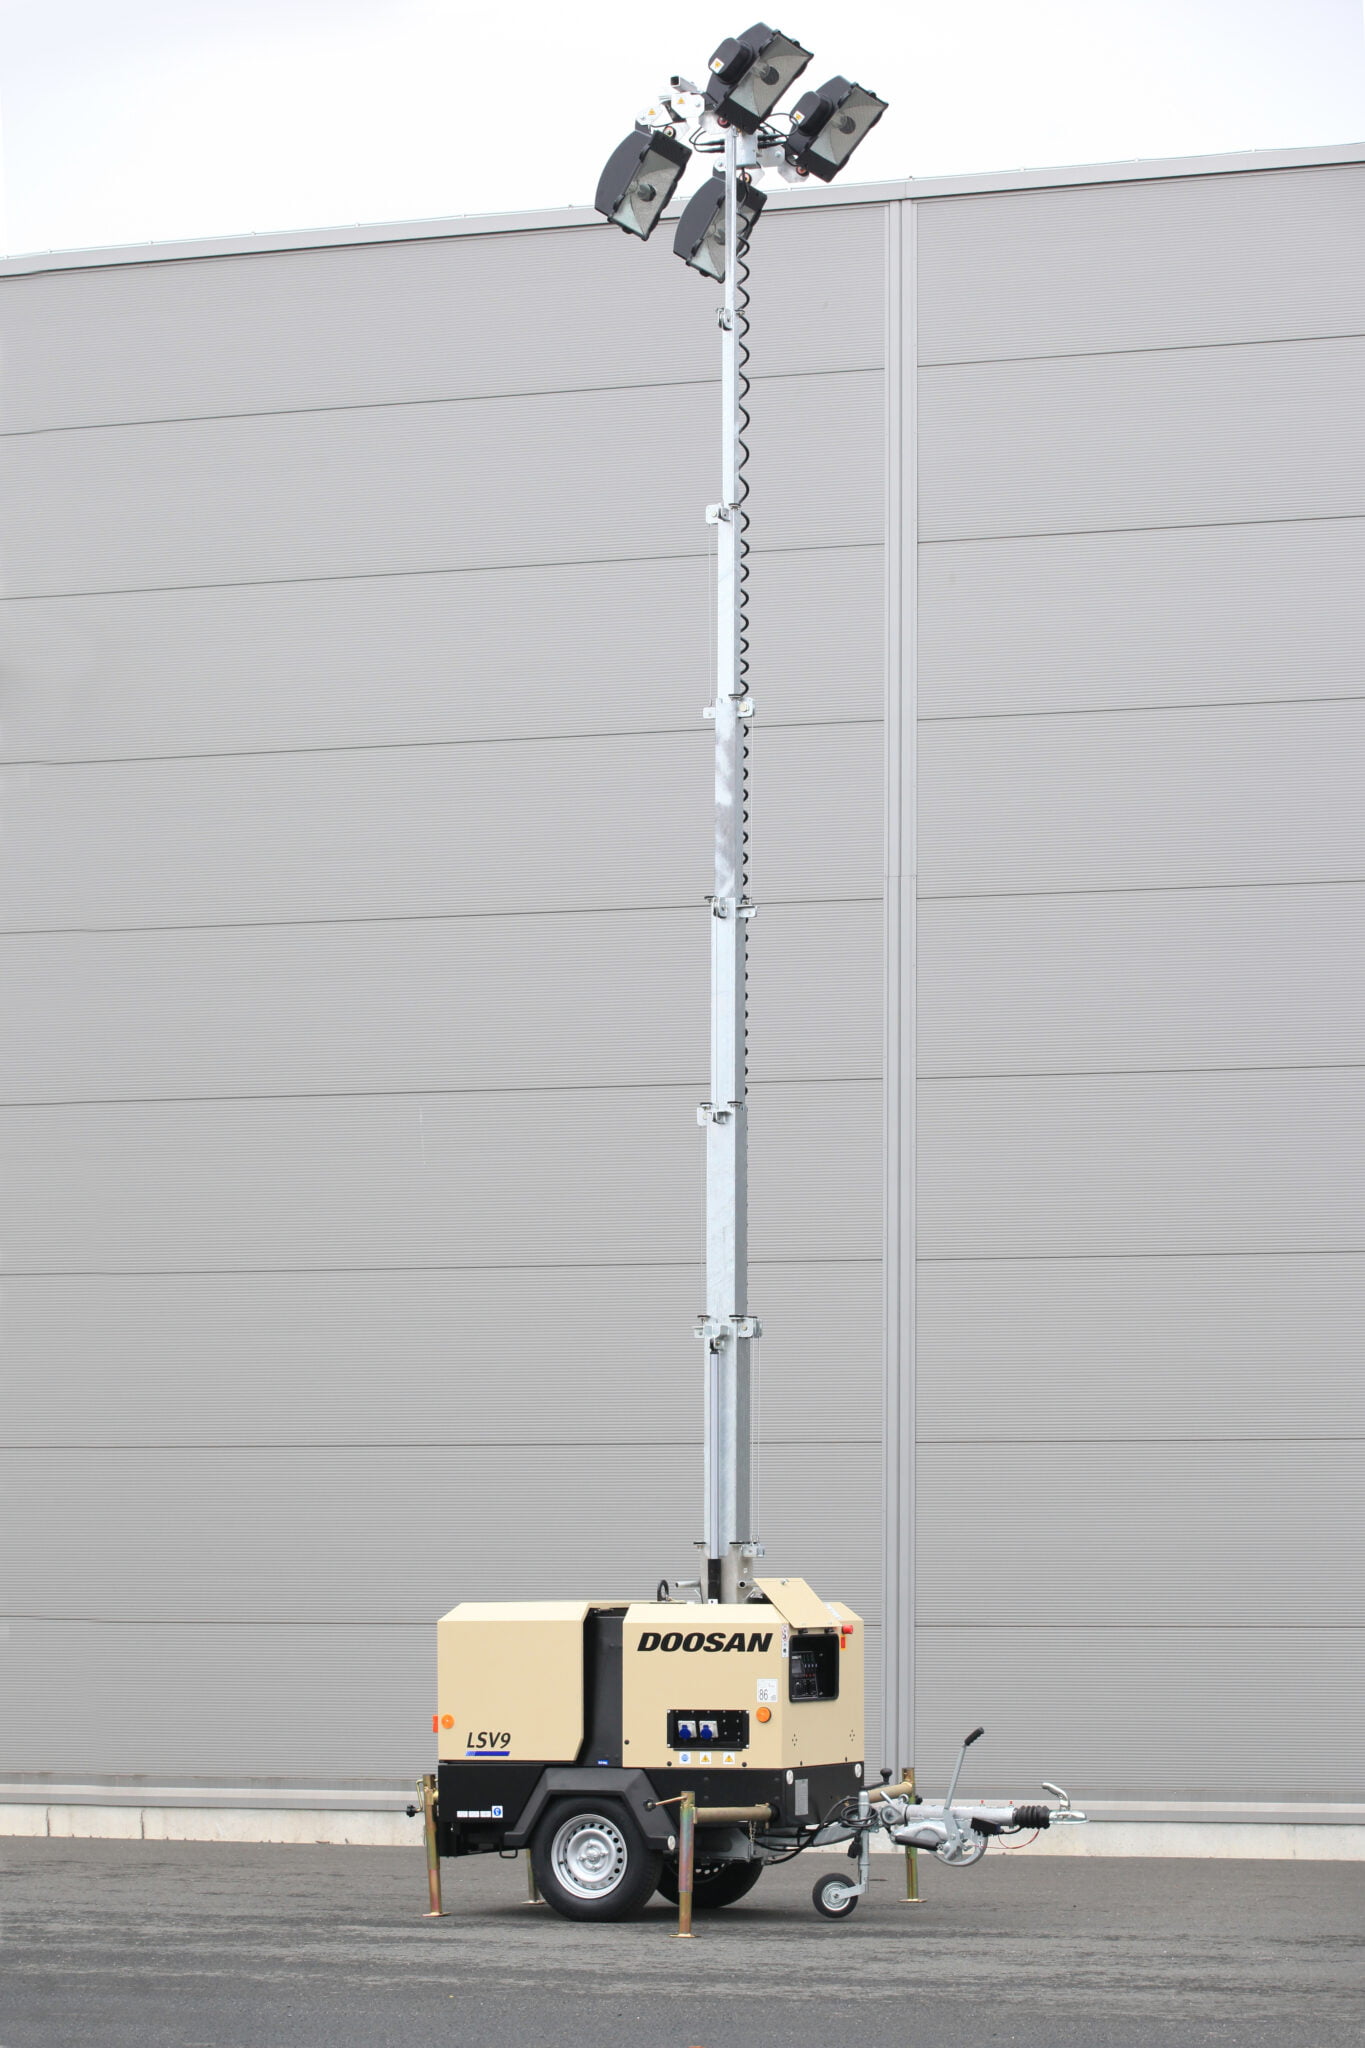 Leiserag Doosan Portable Power Fahrbarer Lichtmast V9 2